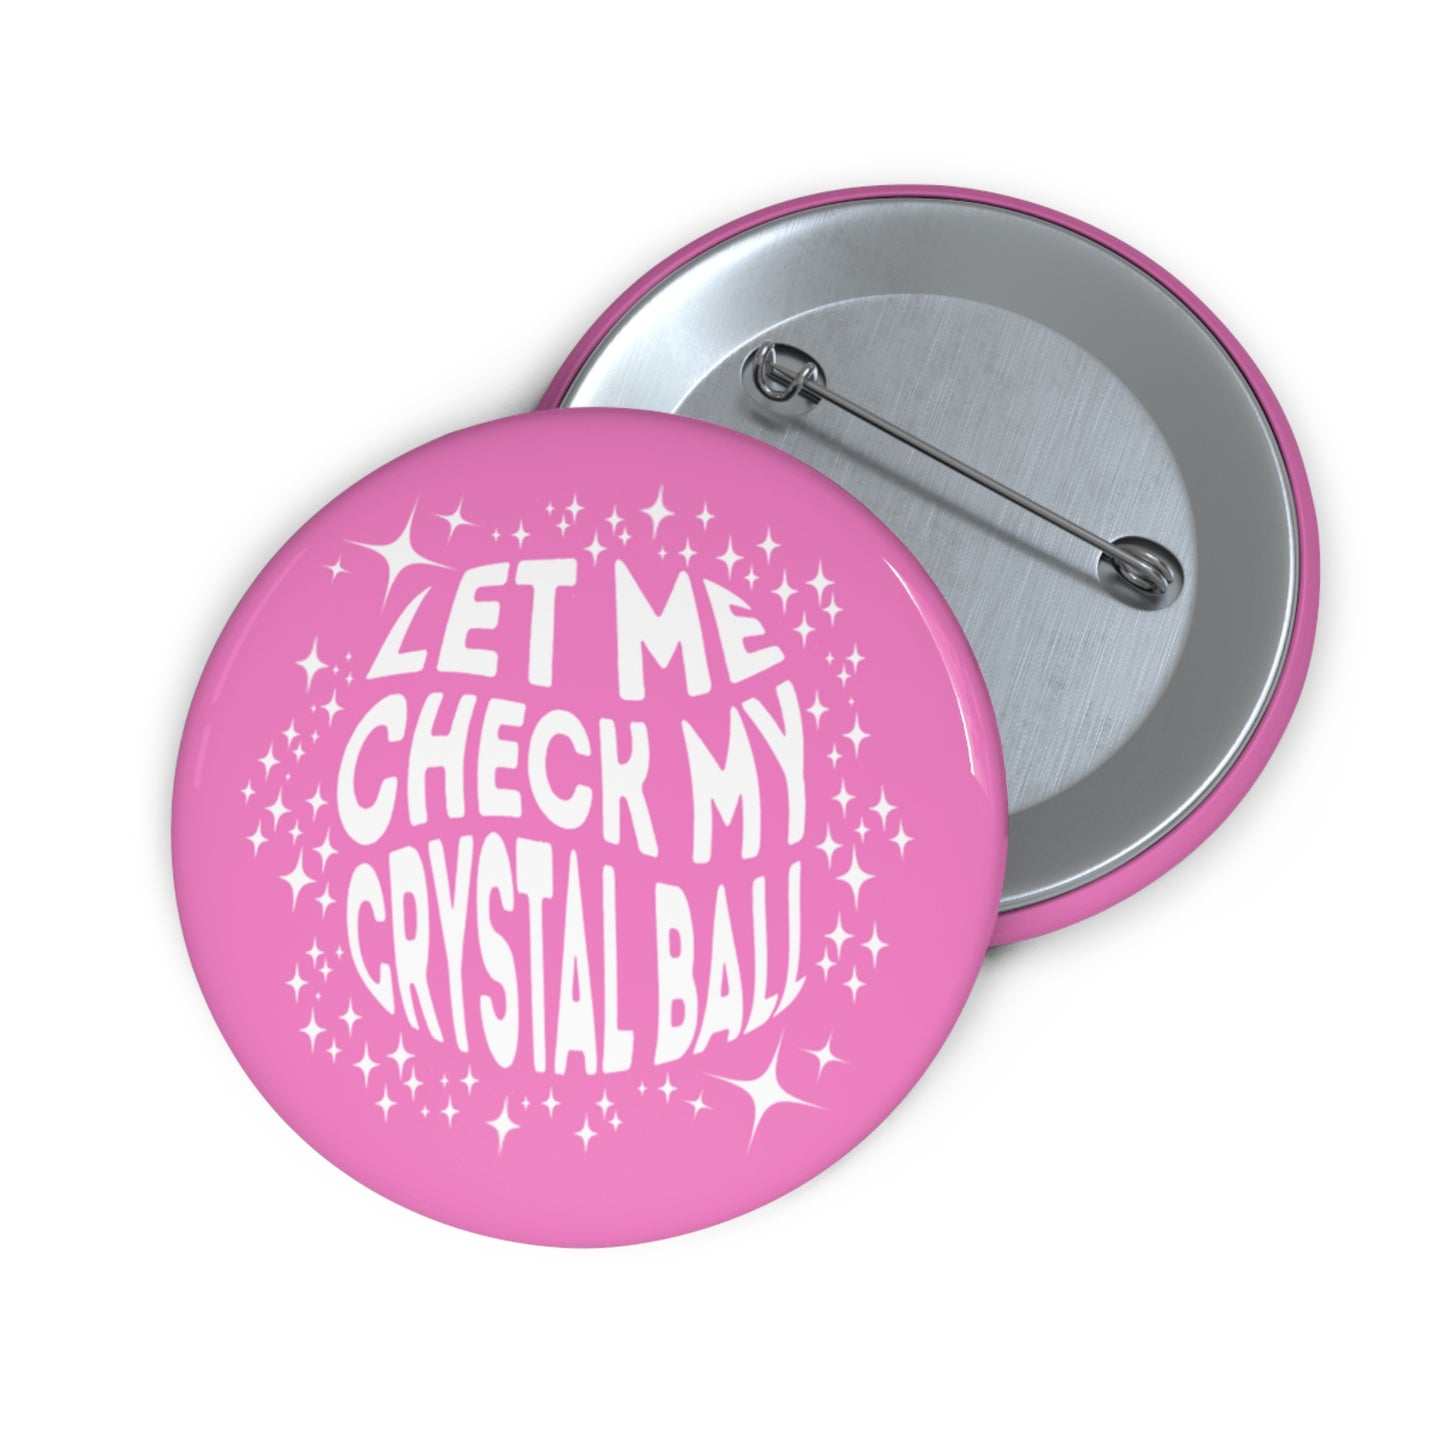 Crystal Ball Pin